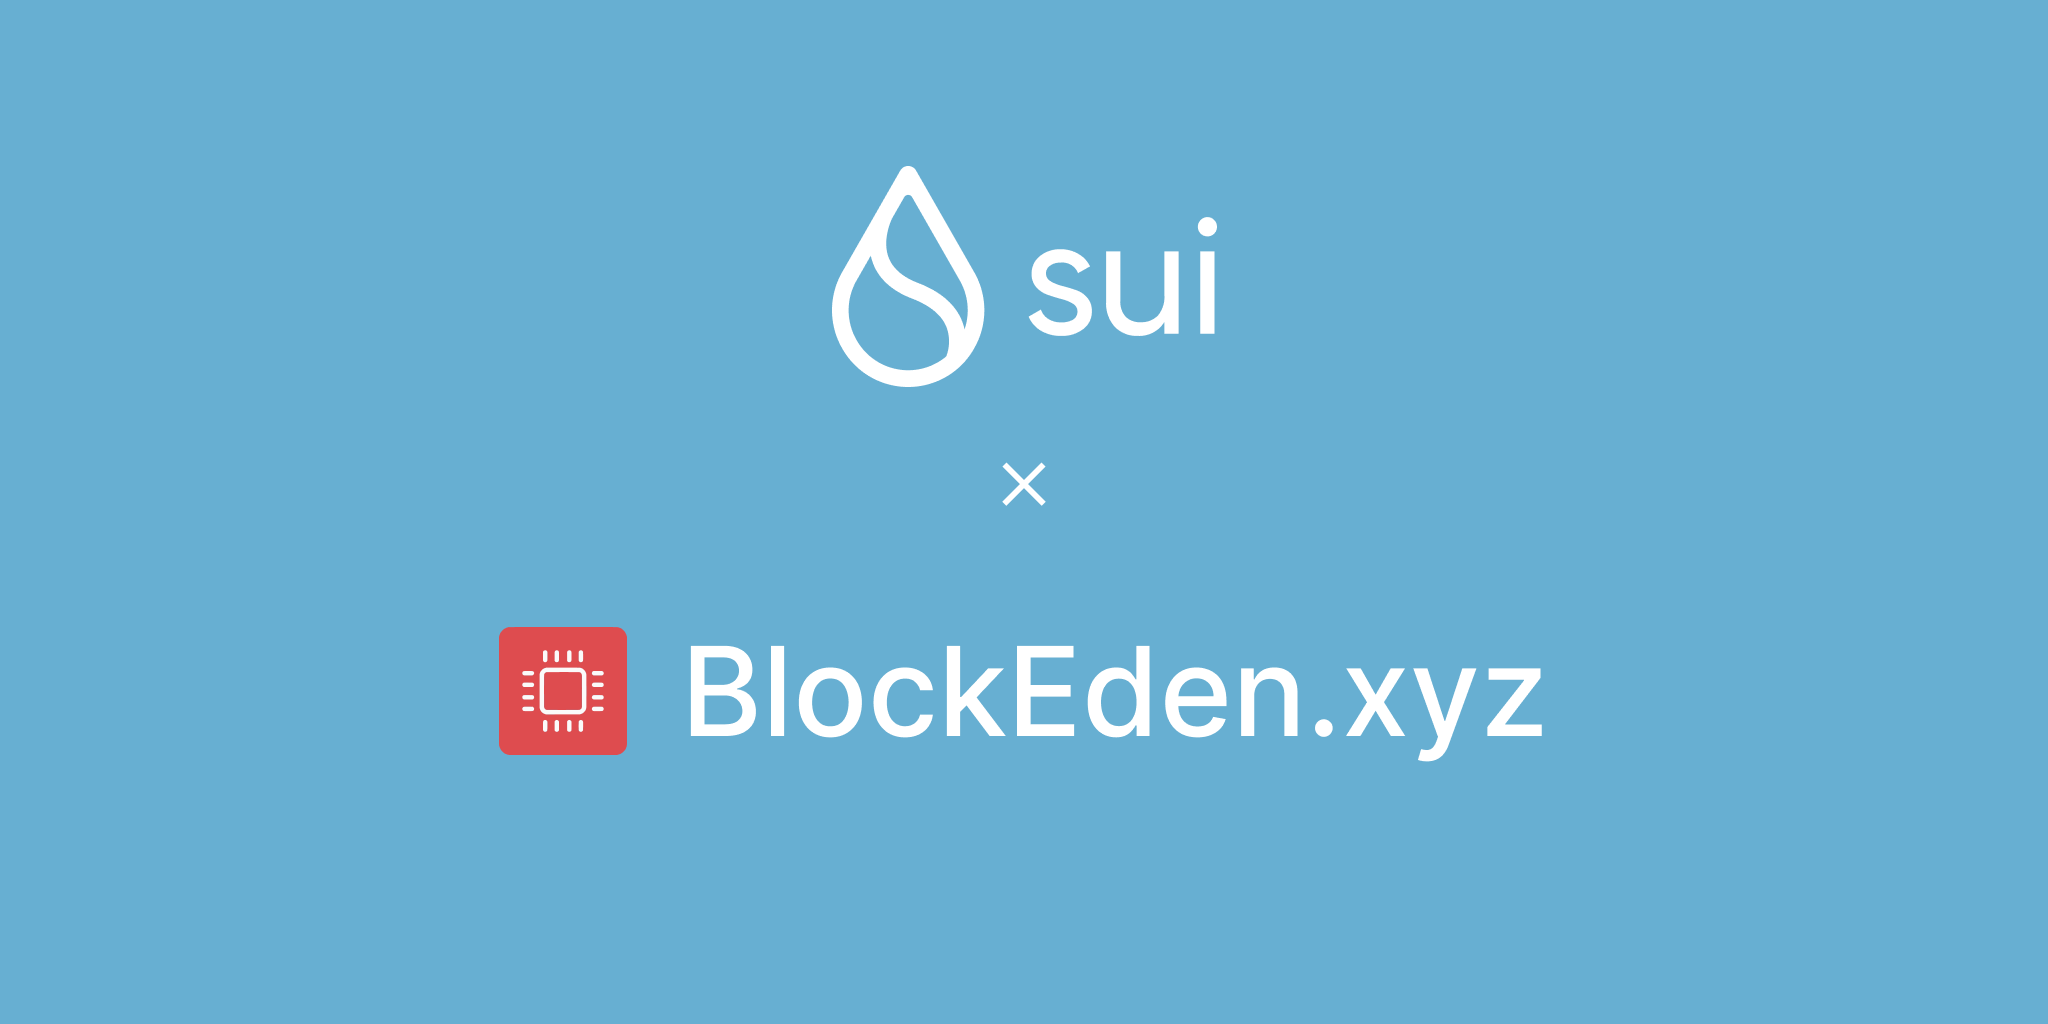 Sui and BlockEden.xyz